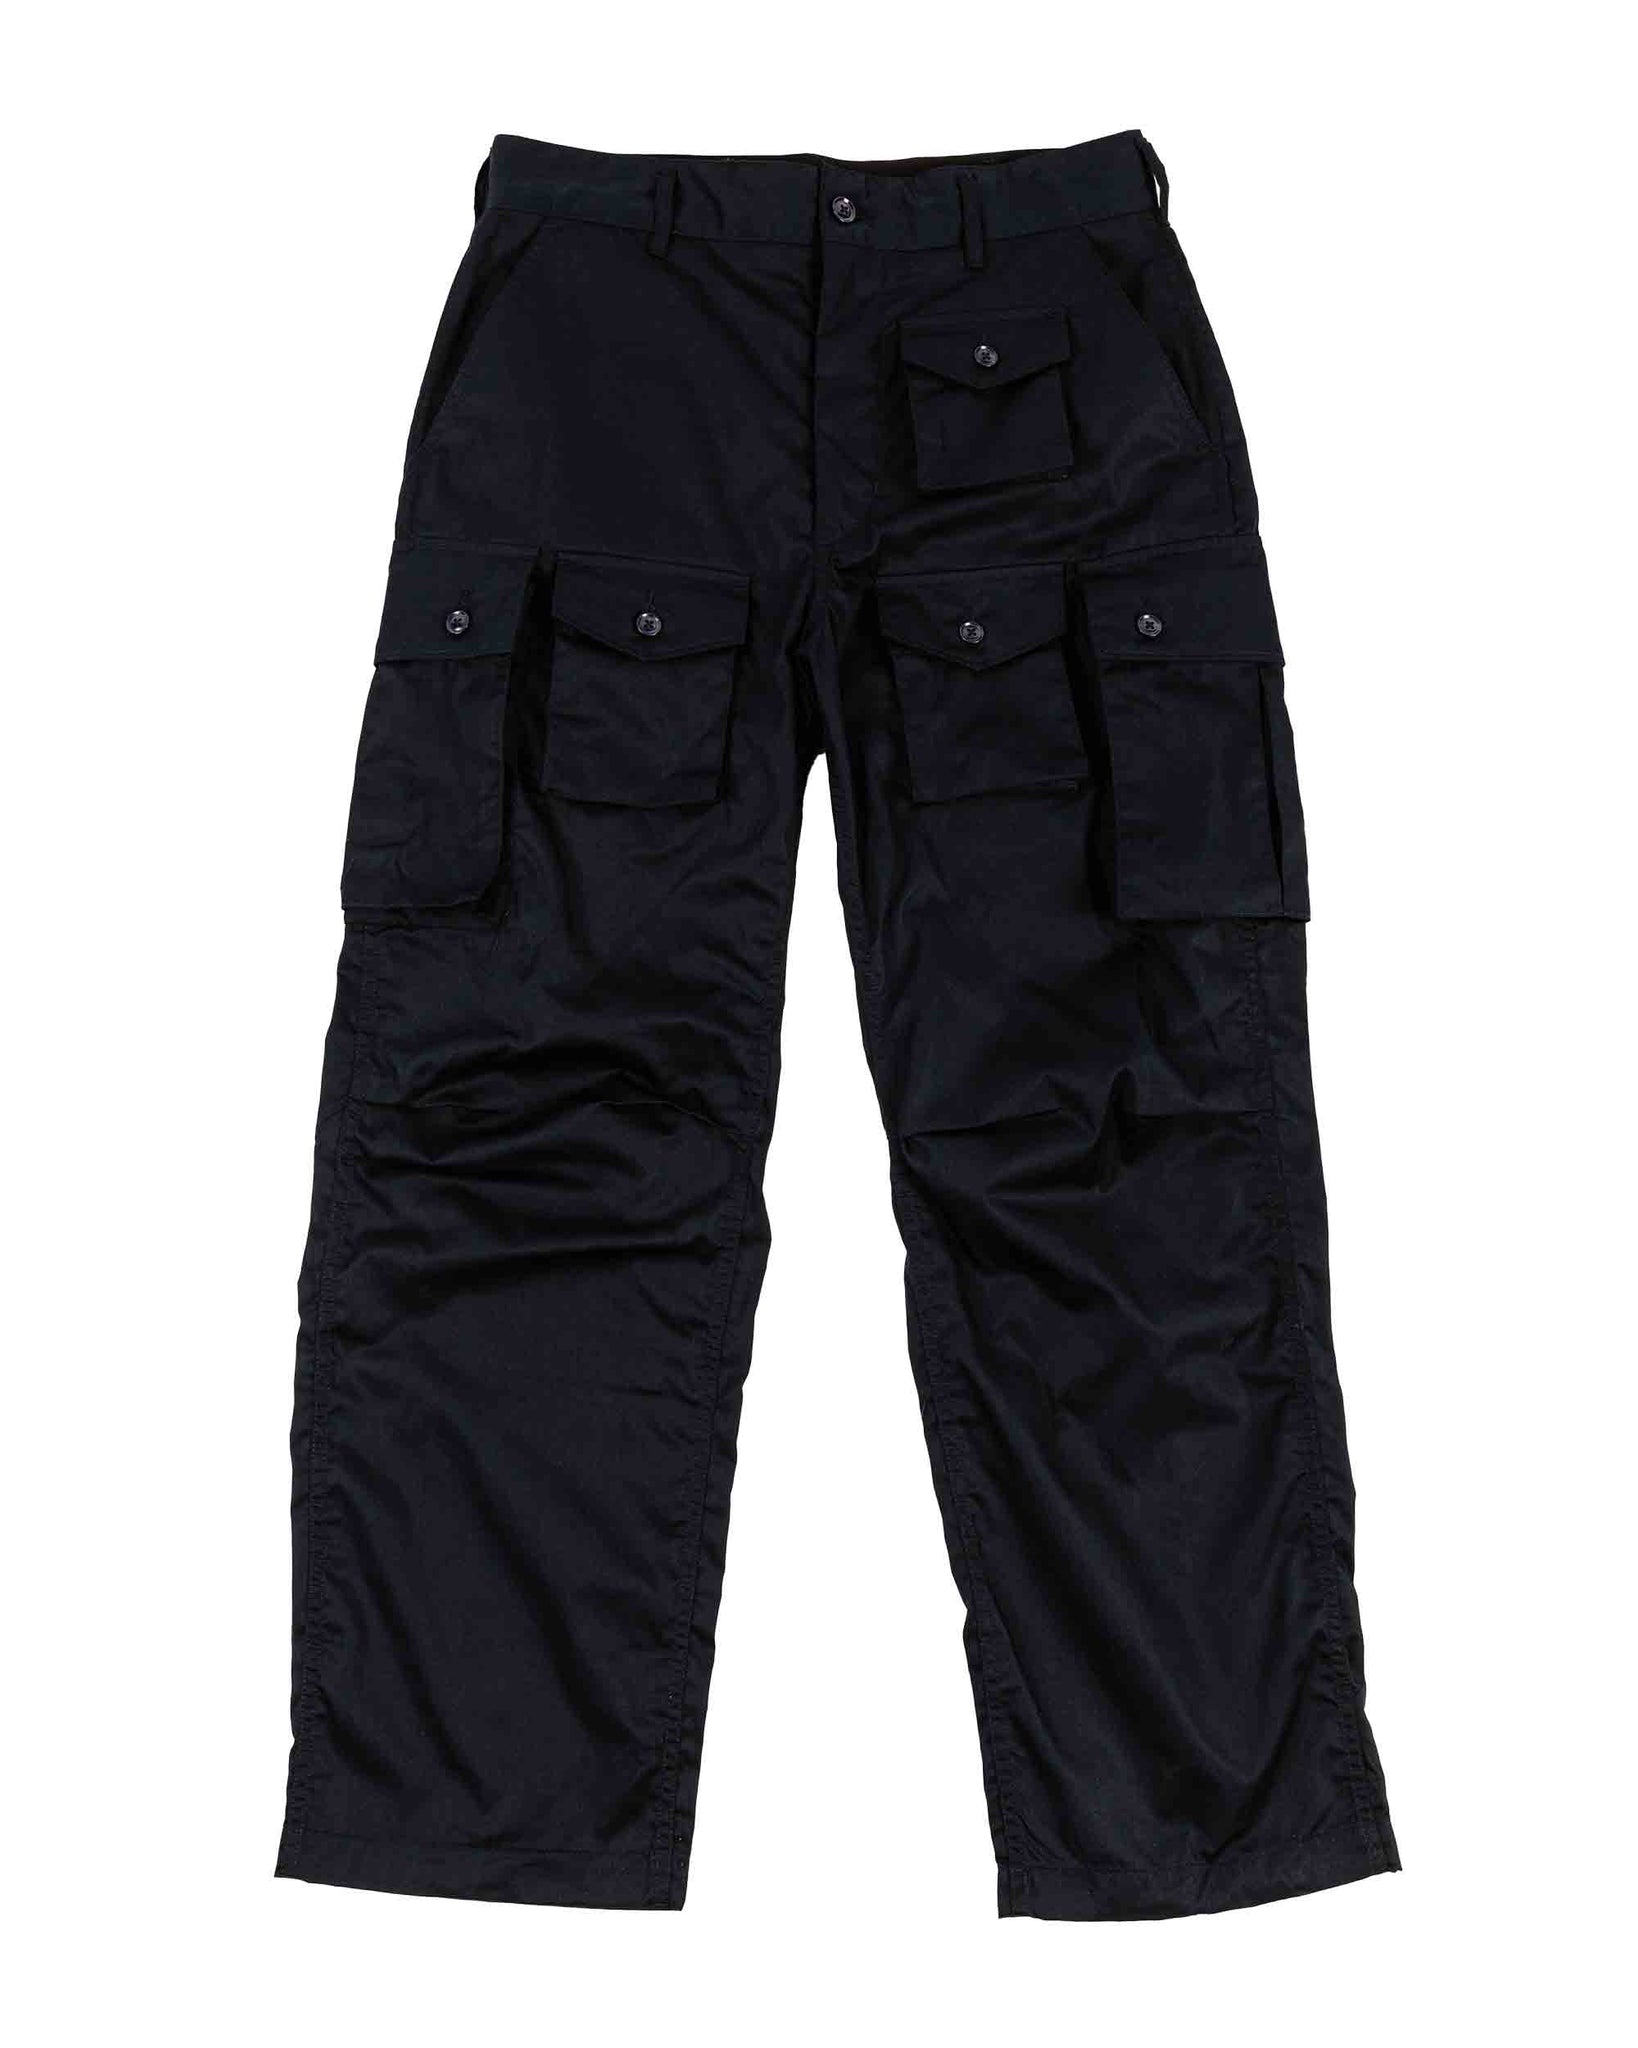 Randy's Garments Cotton Ripstop Utility Pant Dark Navy - Made in USA, Pants